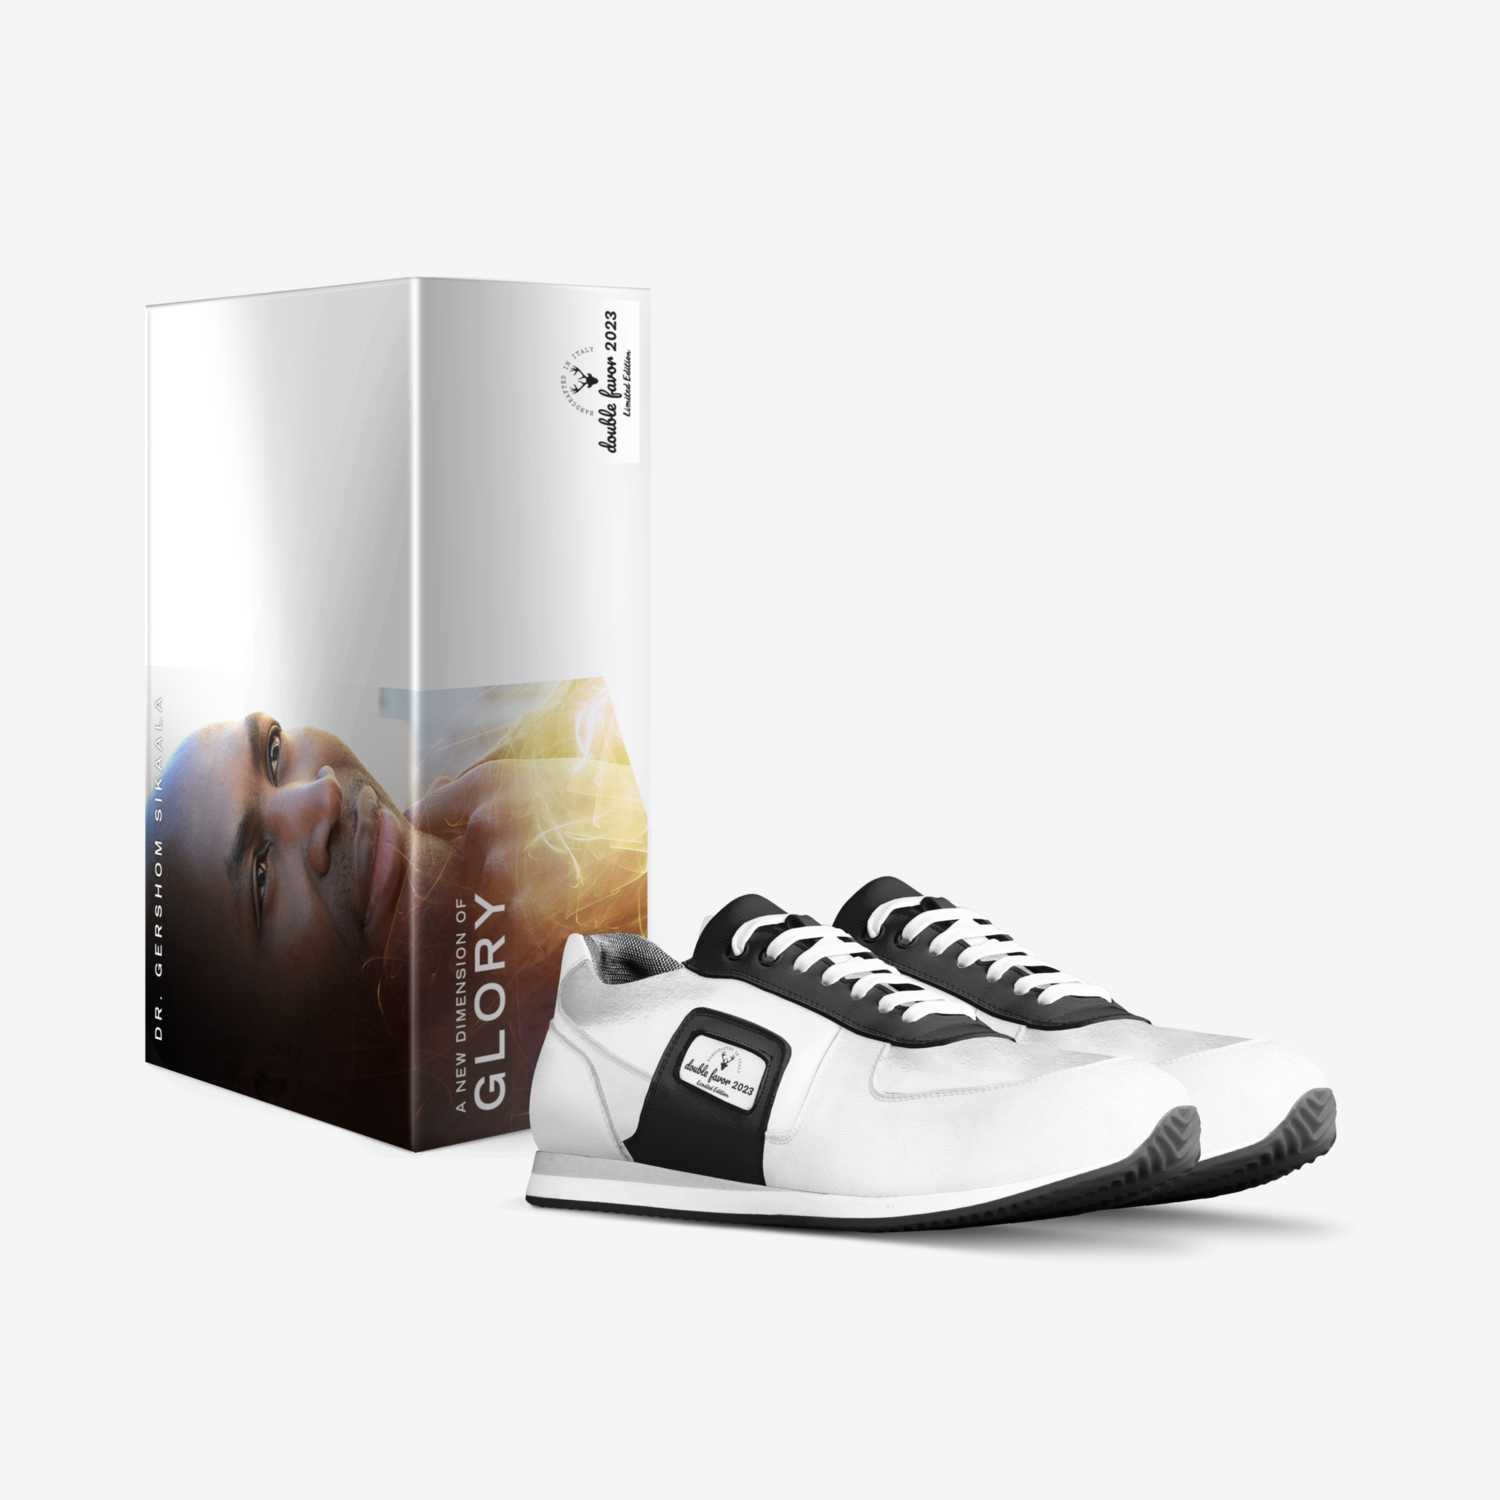 prayer walks custom made in Italy shoes by Gershom Sikaala | Box view